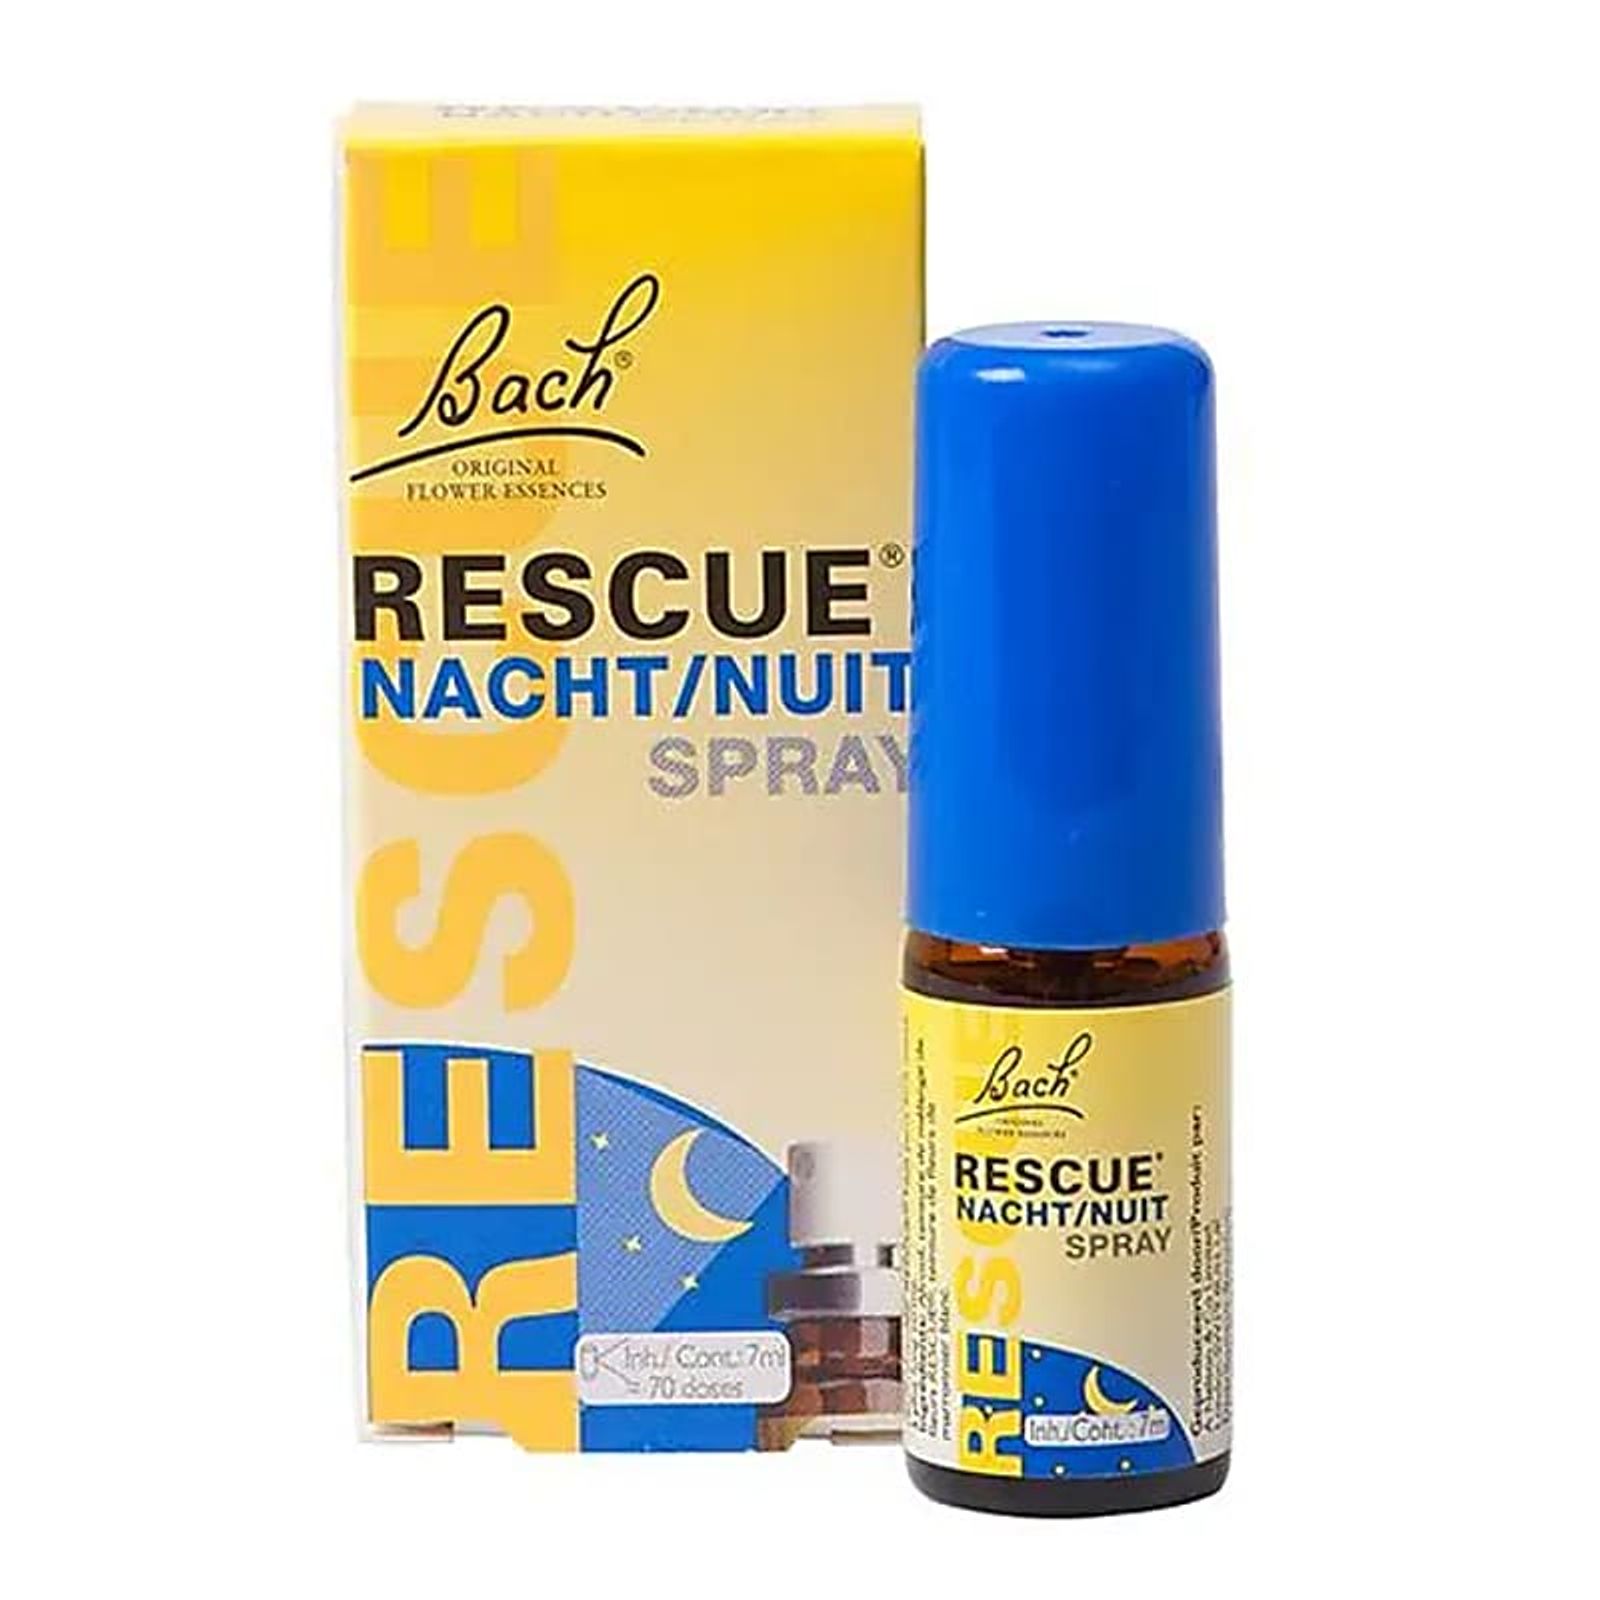 Bach Rescue Nacht Spray klein -- 7 ml